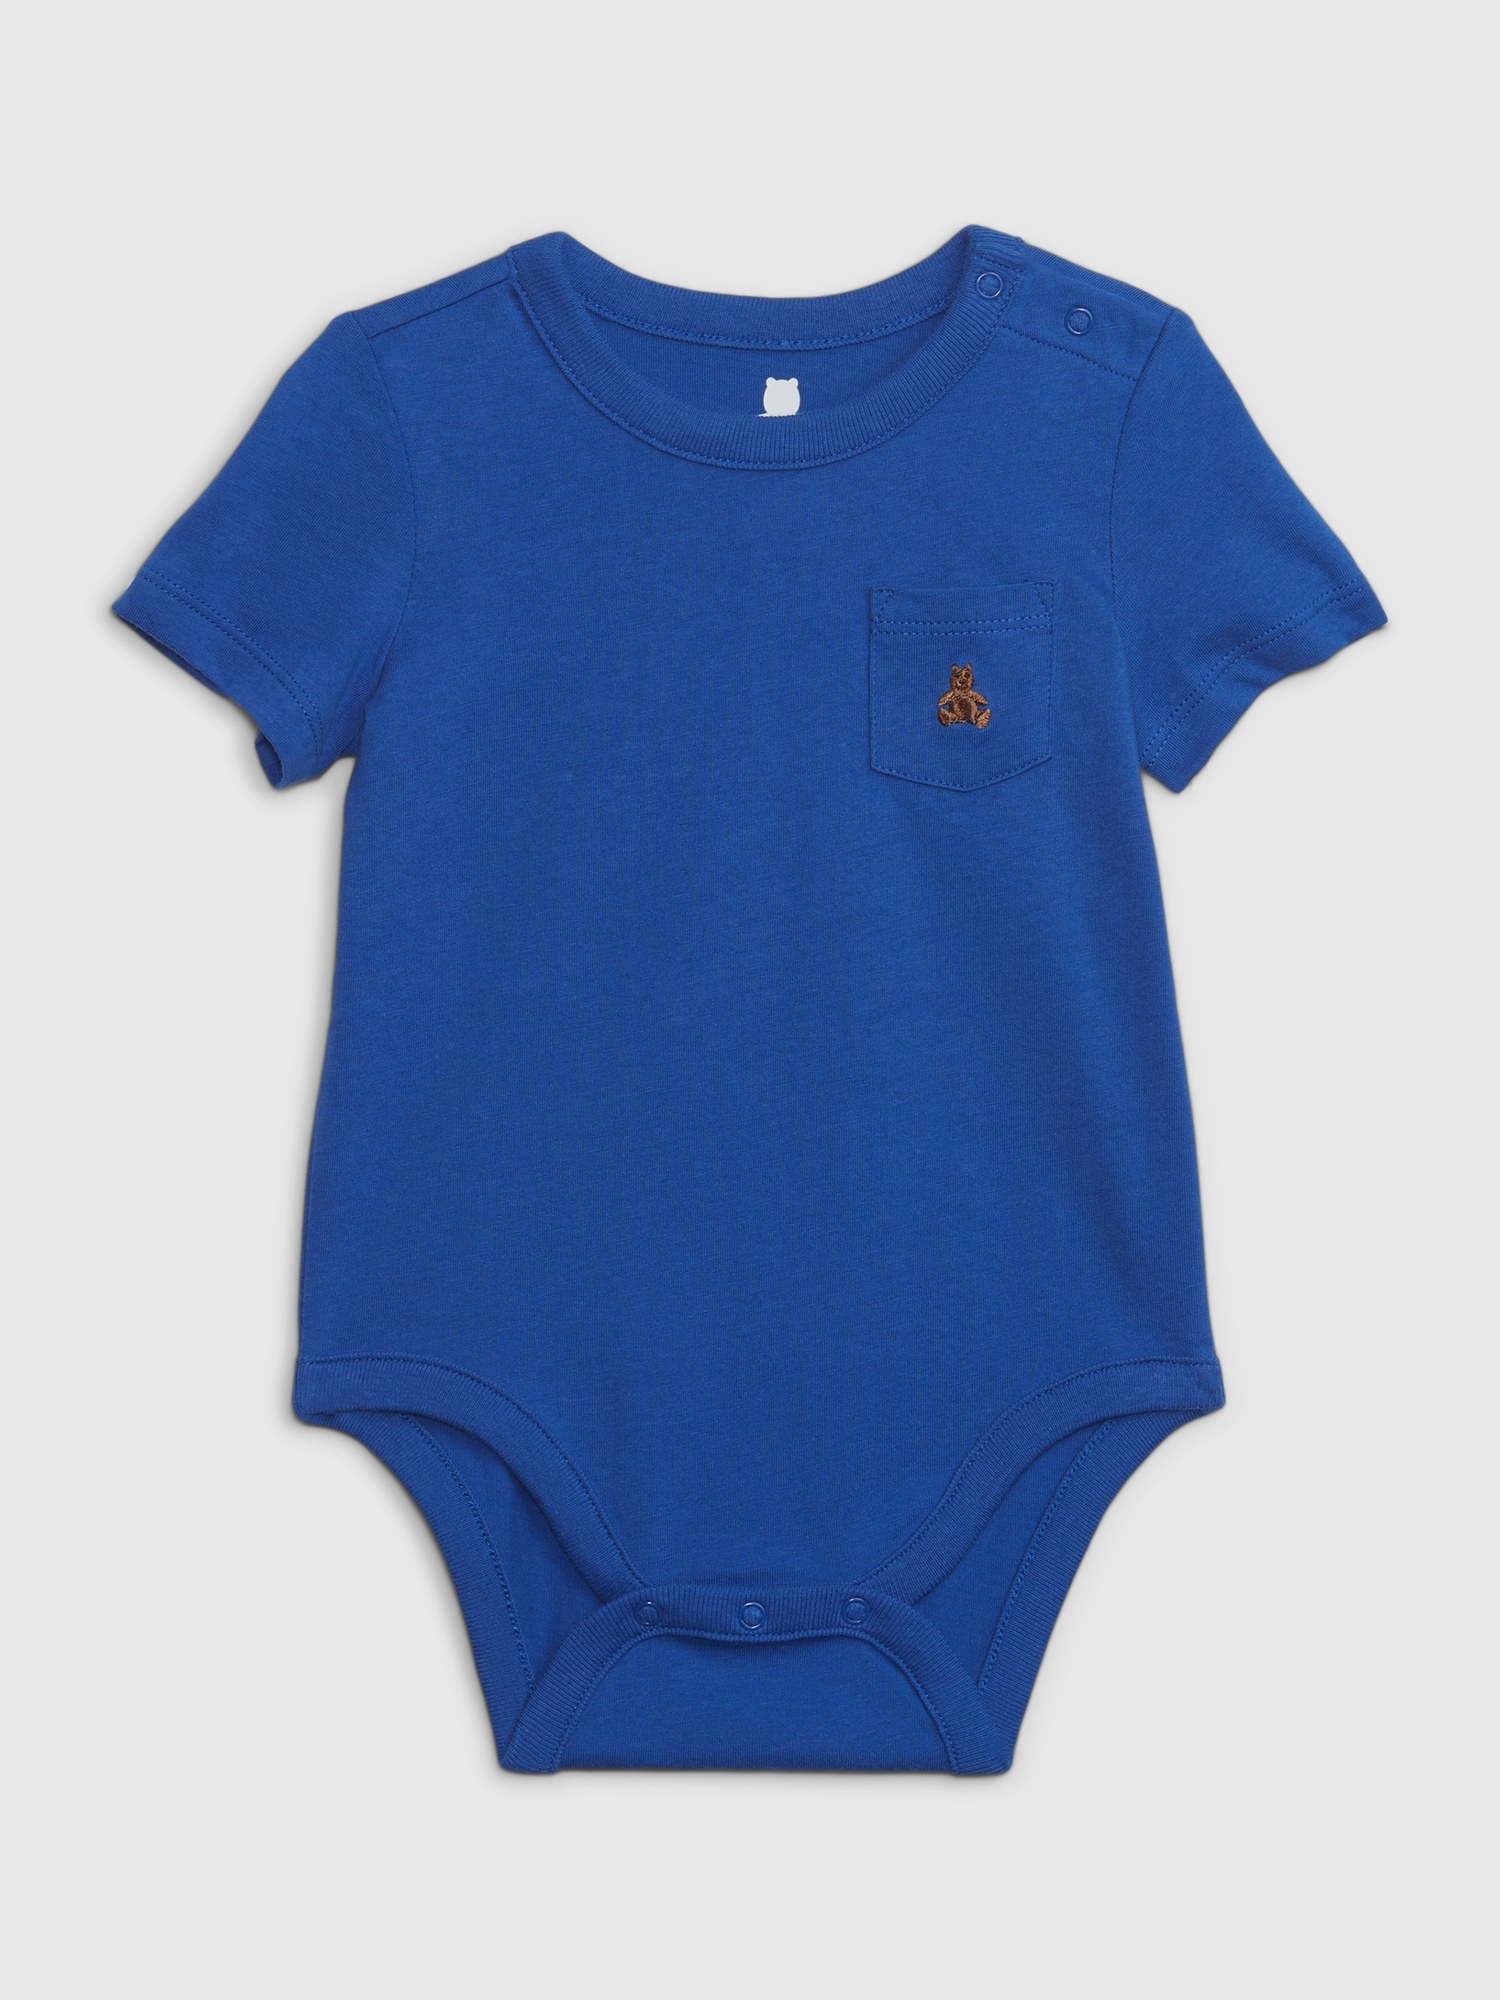 Gap Baby 100% Organic Cotton Mix and Match Pocket Bodysuit blue. 1